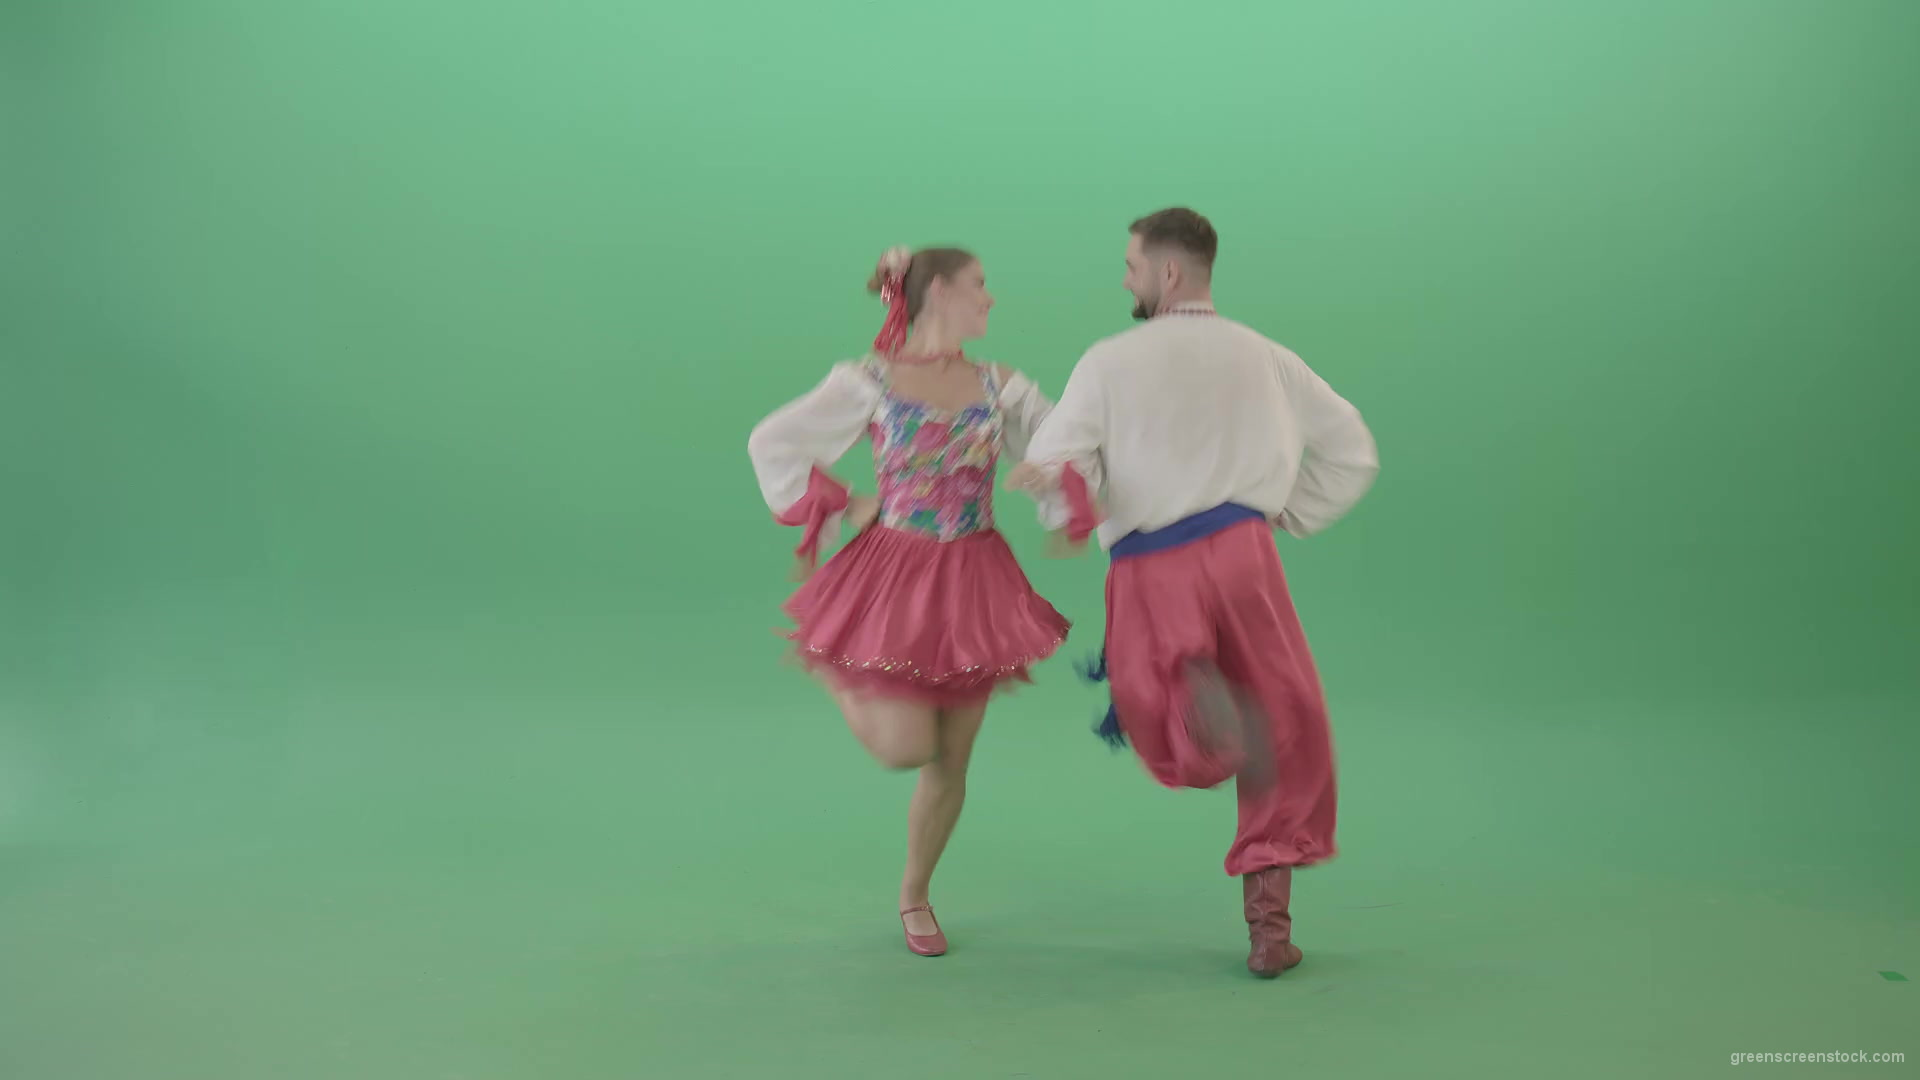 Ukraine-national-dancing-couple-shows-folk-dance-4K-Video-Footage-1920_005 Green Screen Stock